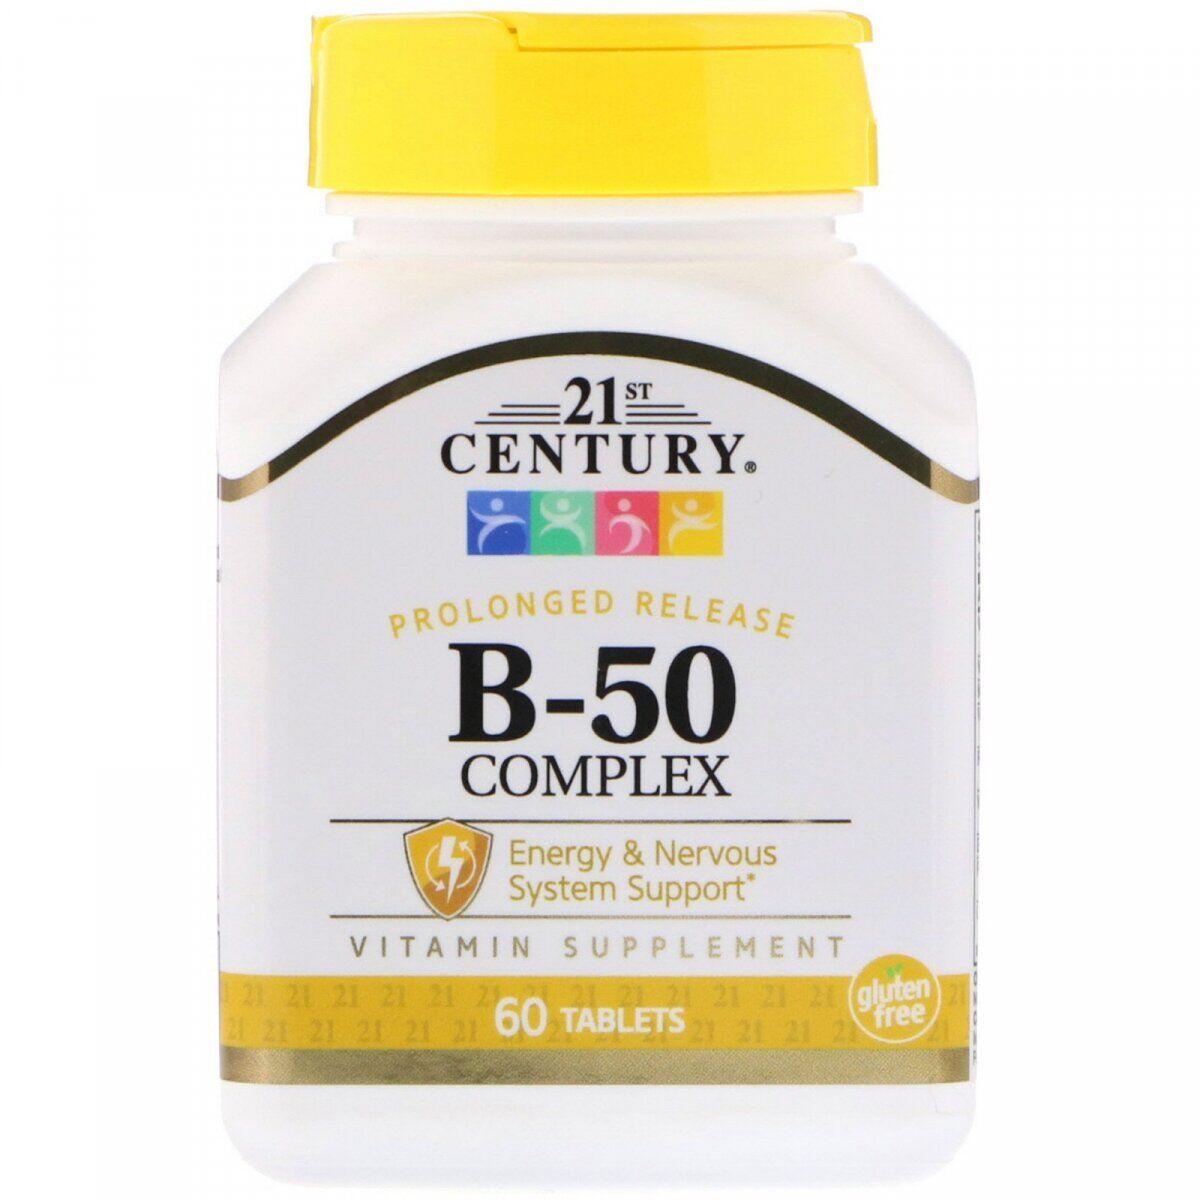 21st Century Вітамінна добавка 21st Century B-50 Complex, Prolonged Release, 60 Tabs, , 60 шт.